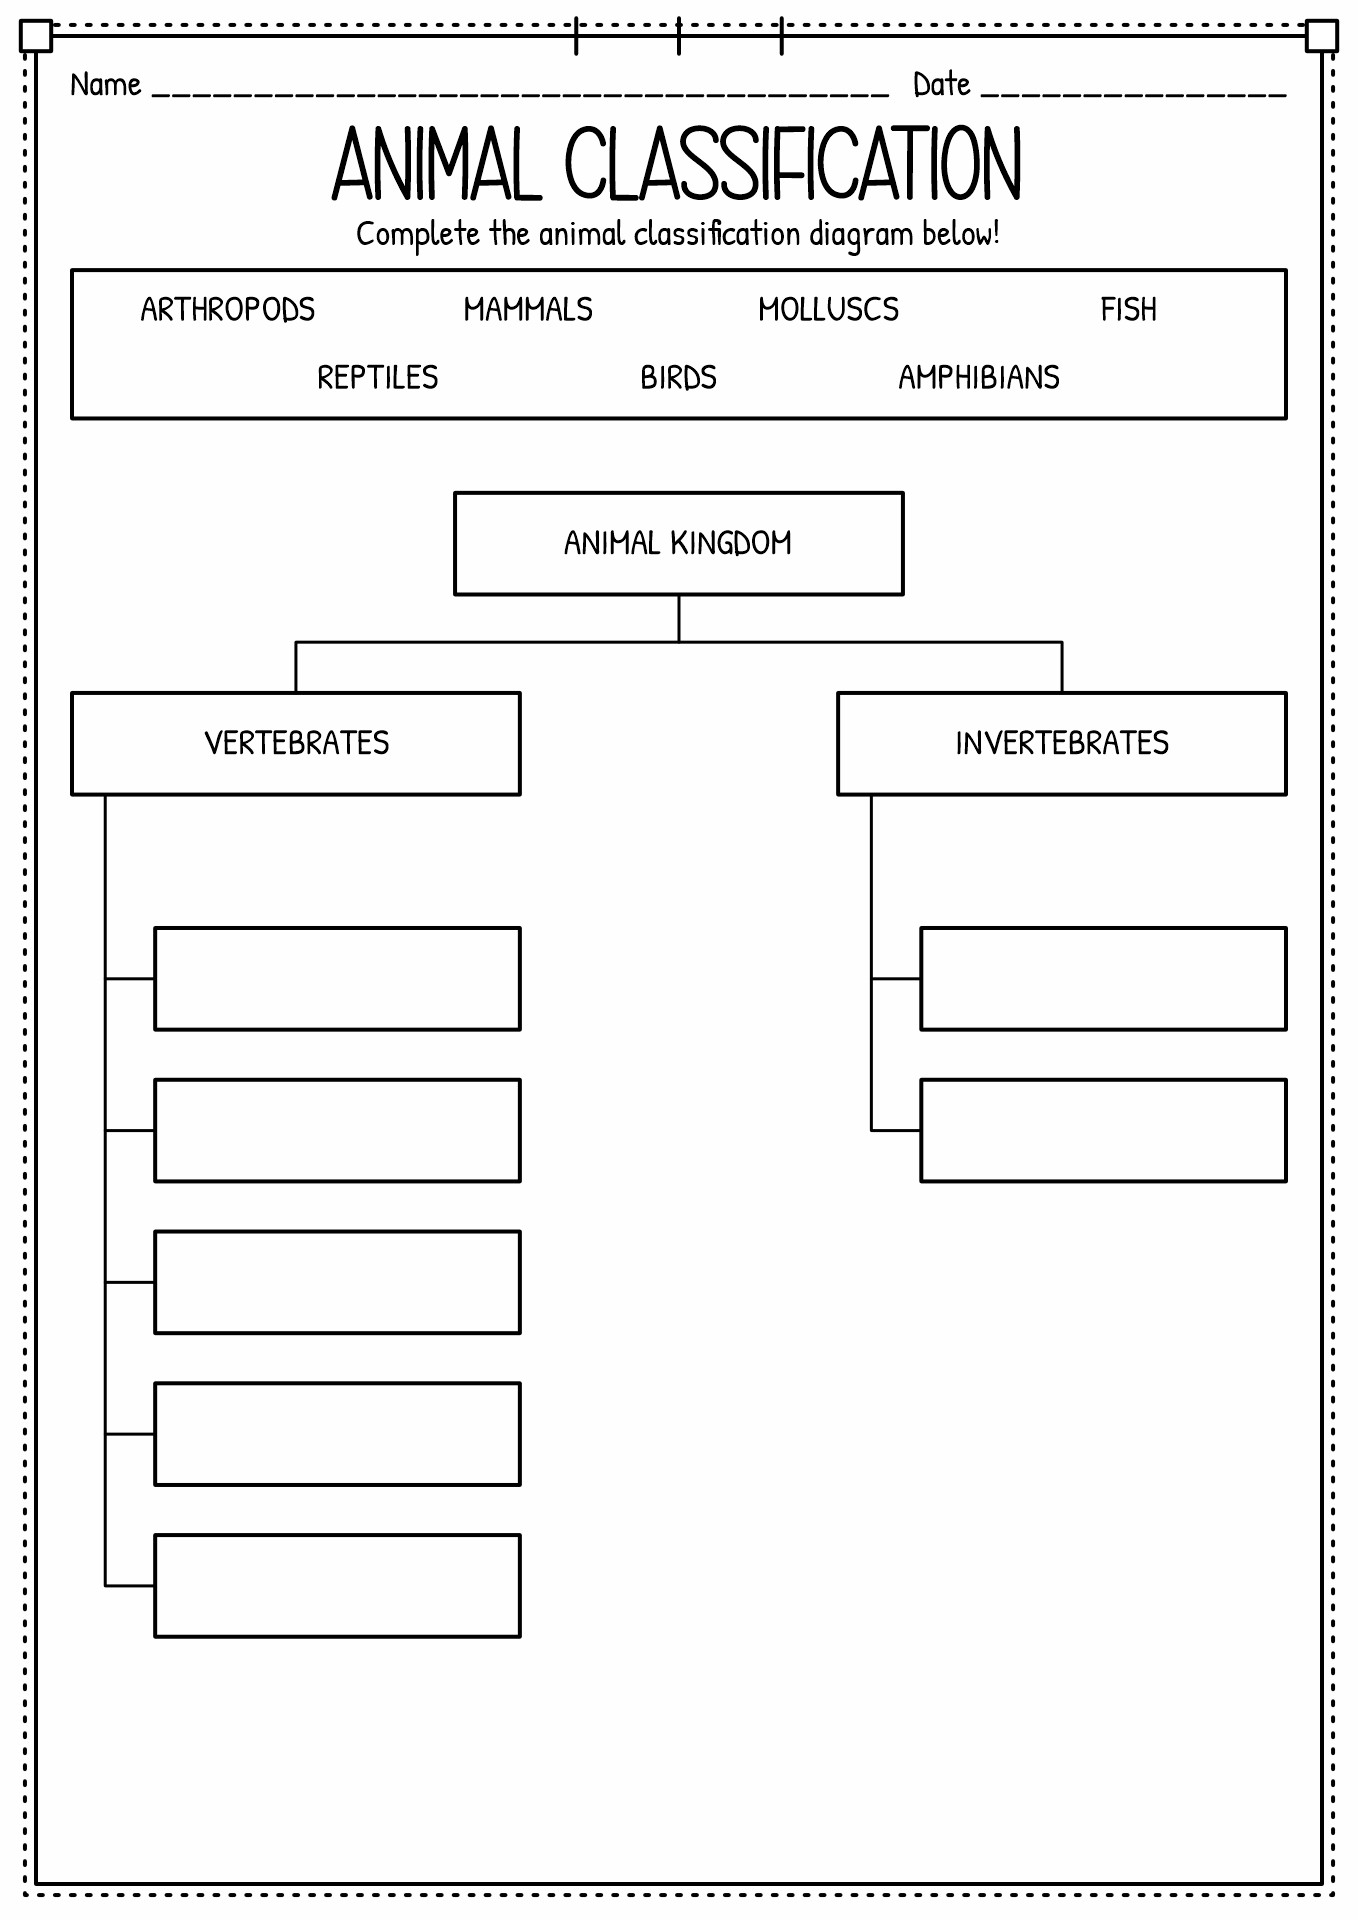 Animal Kingdom Classification Worksheet